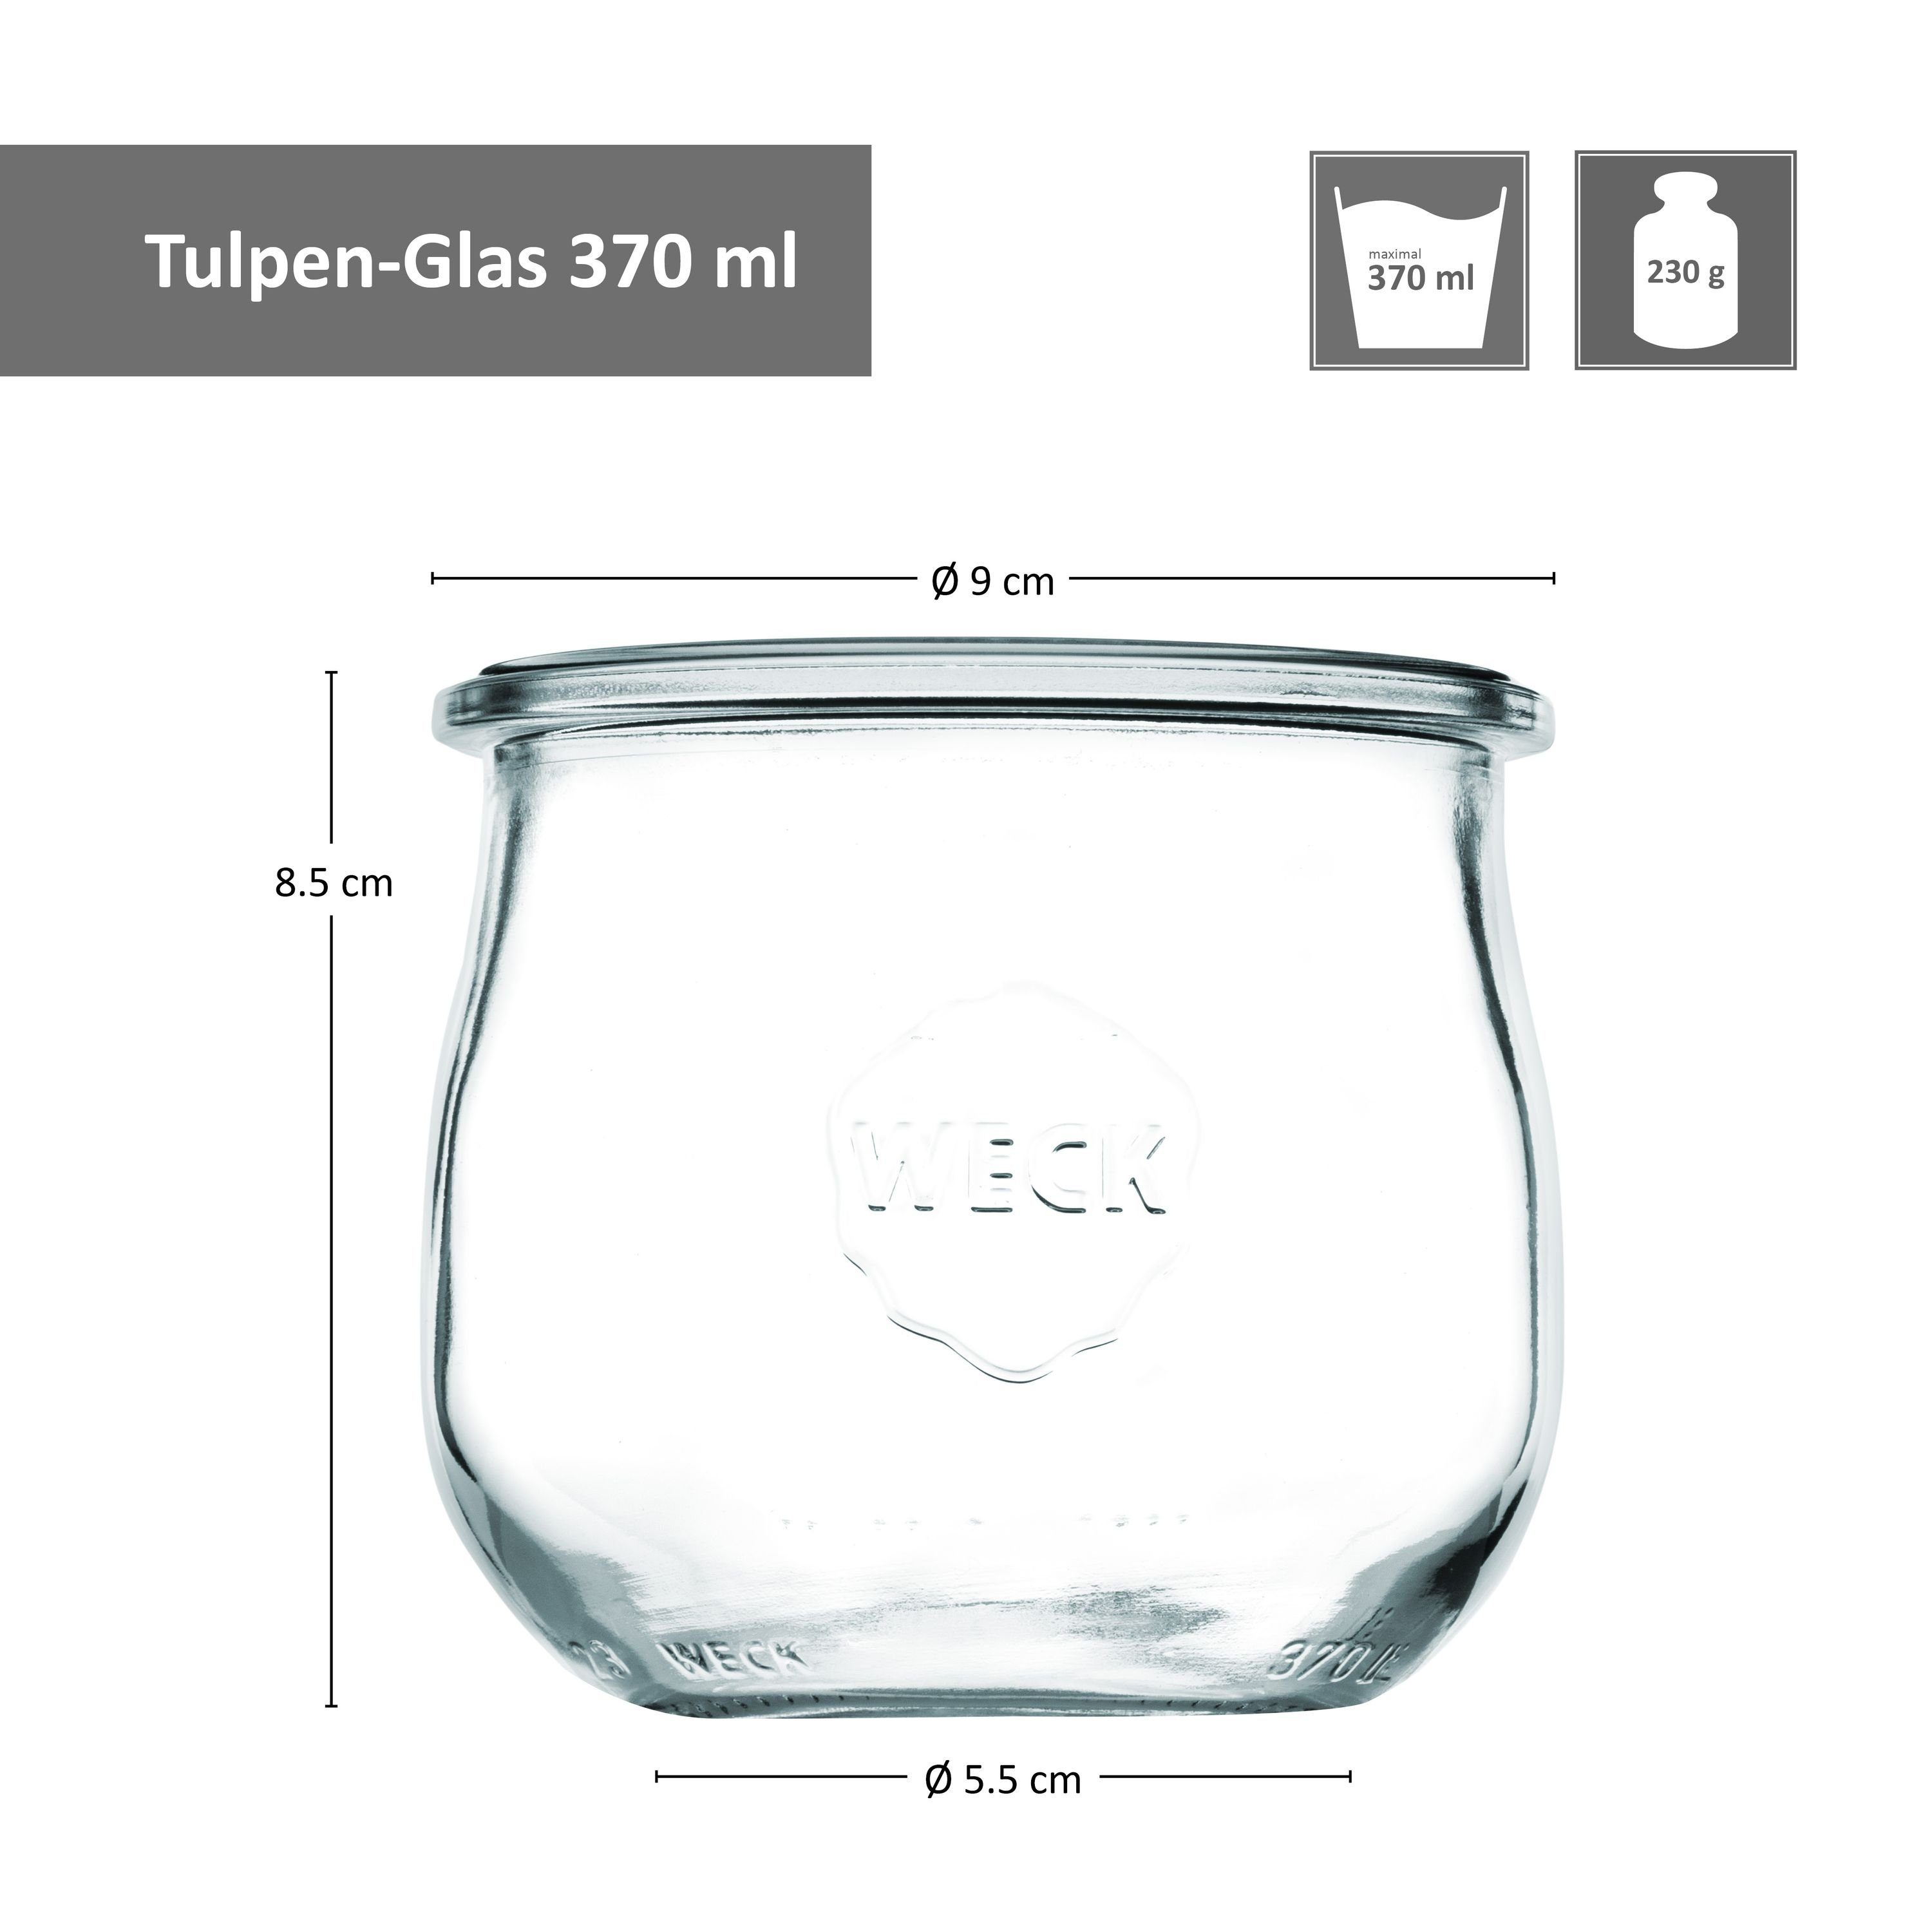 Set 48er Einmachglas 370ml Glas Weck Tulpenglas Gläser inkl MamboCat Rezeptheft,